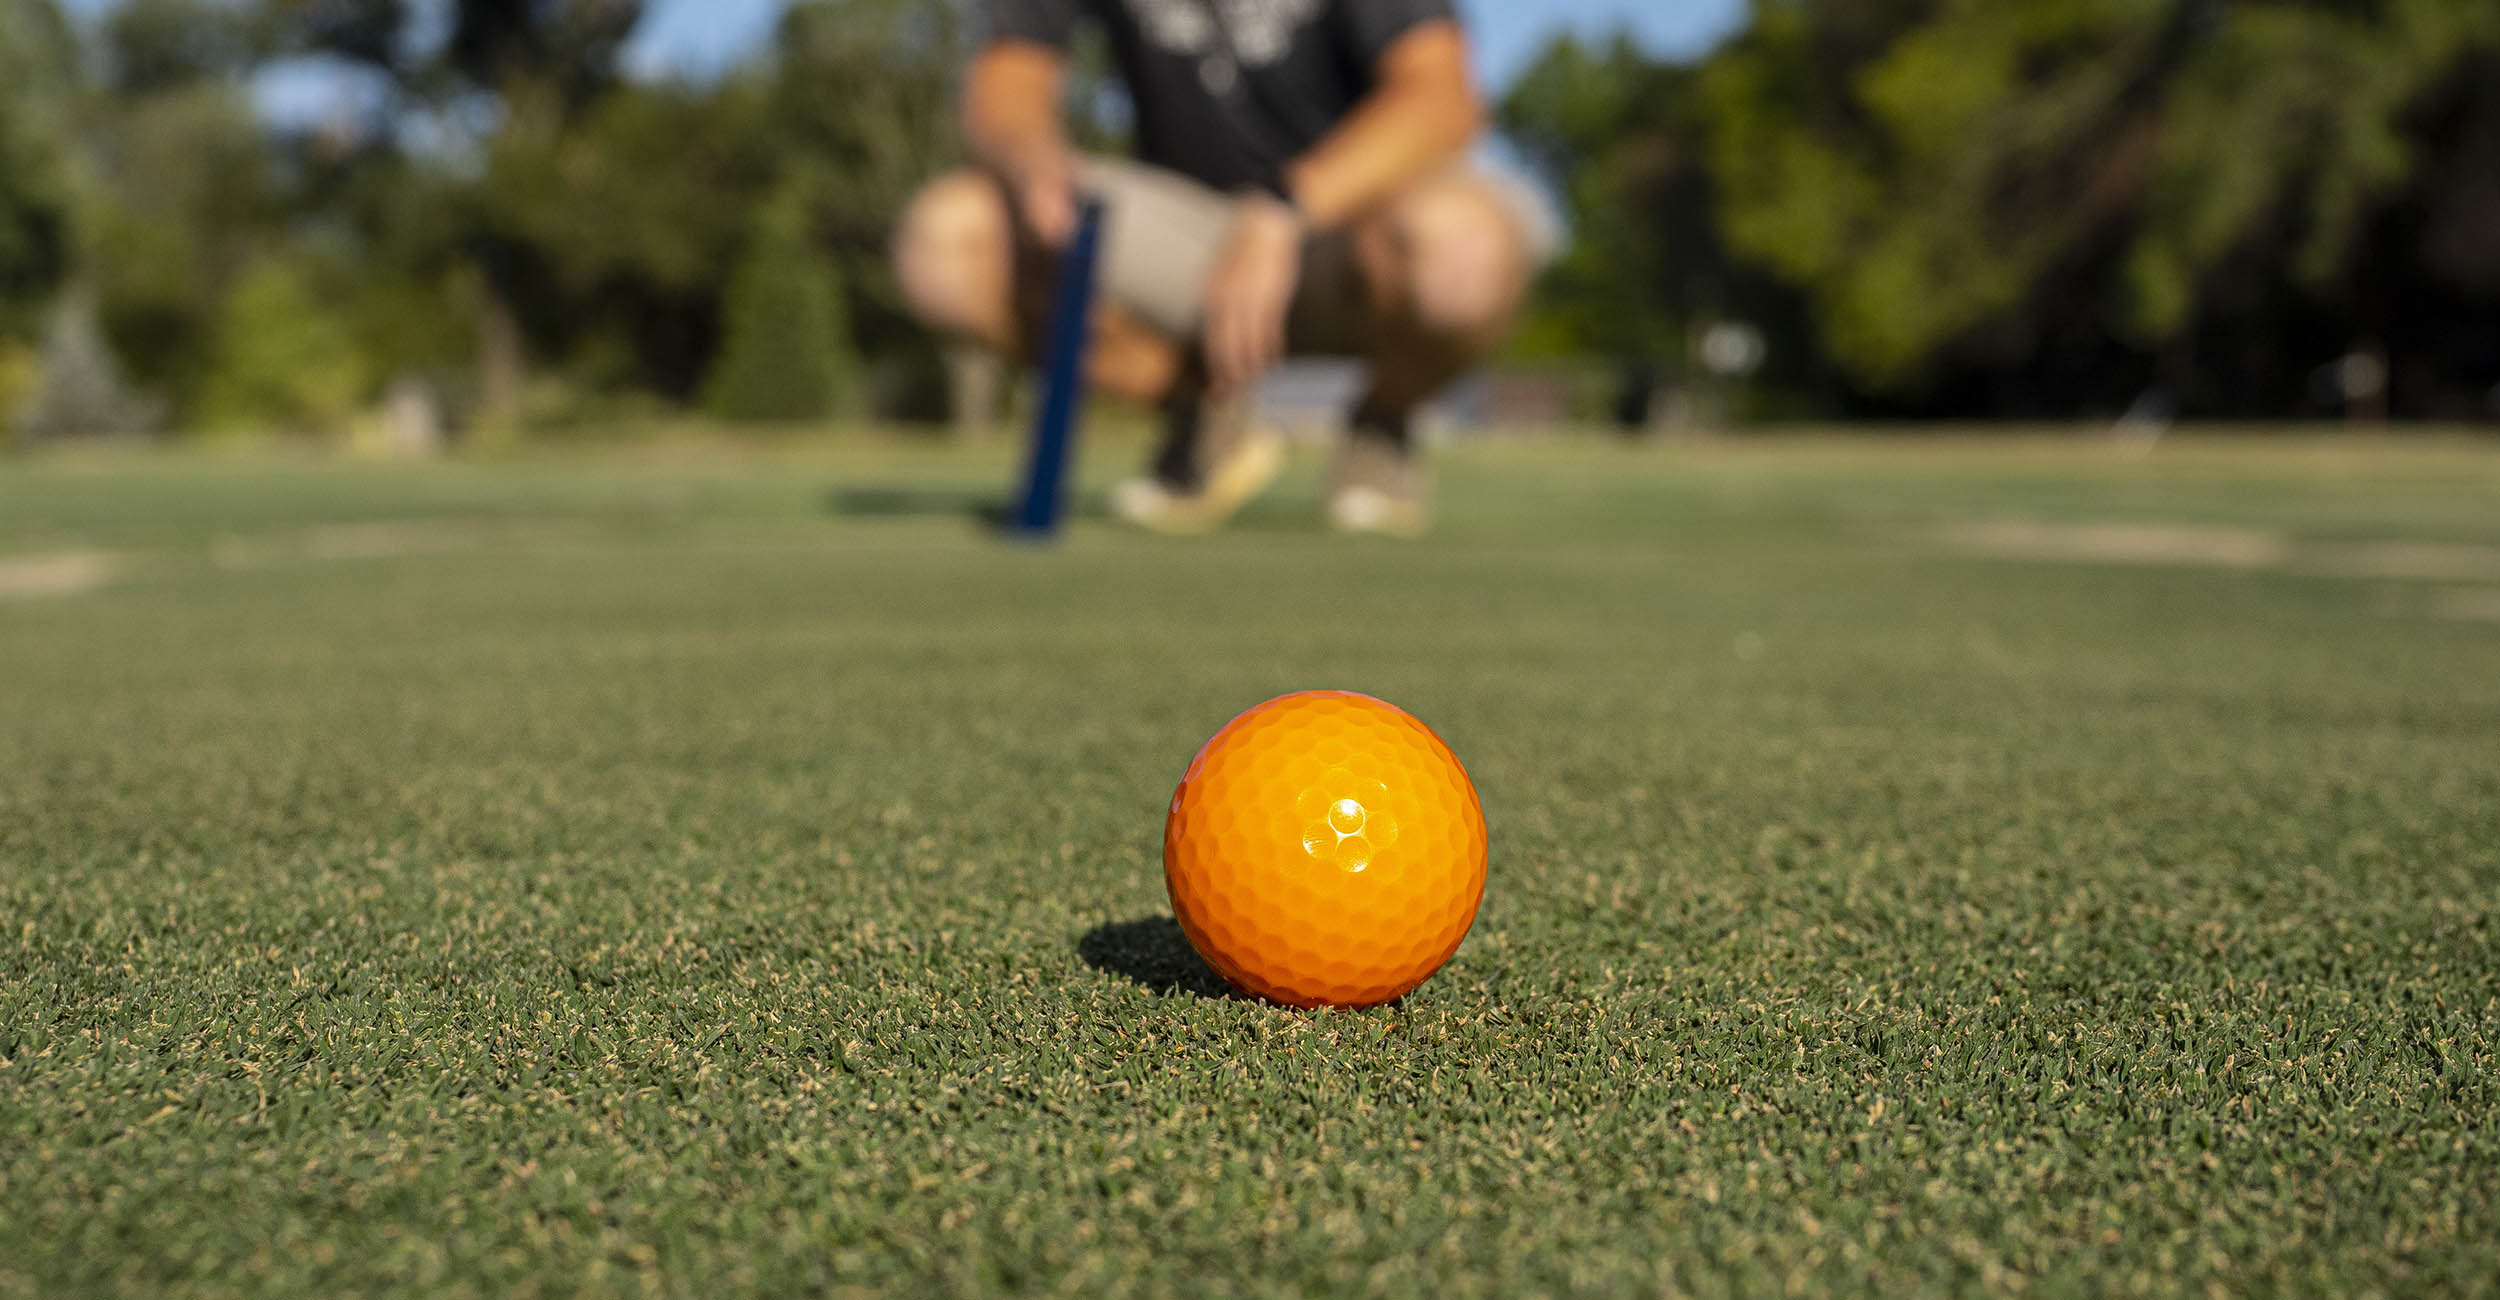 Image of a bright orange golfball on green turfgrass.